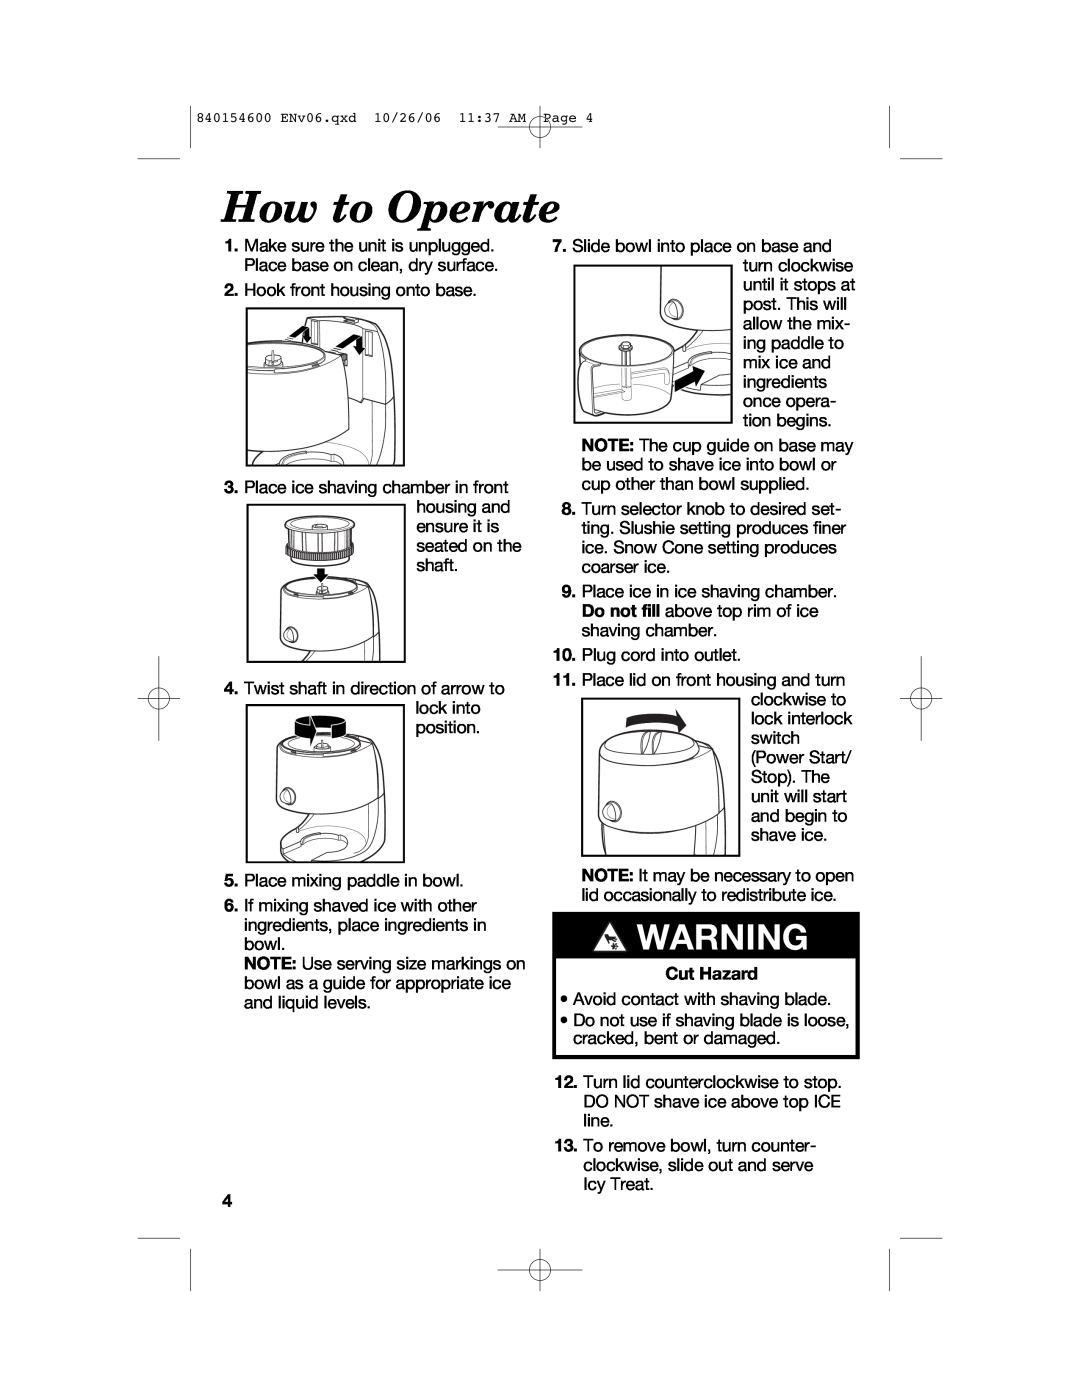 Hamilton Beach 840154600 manual How to Operate, Cut Hazard 